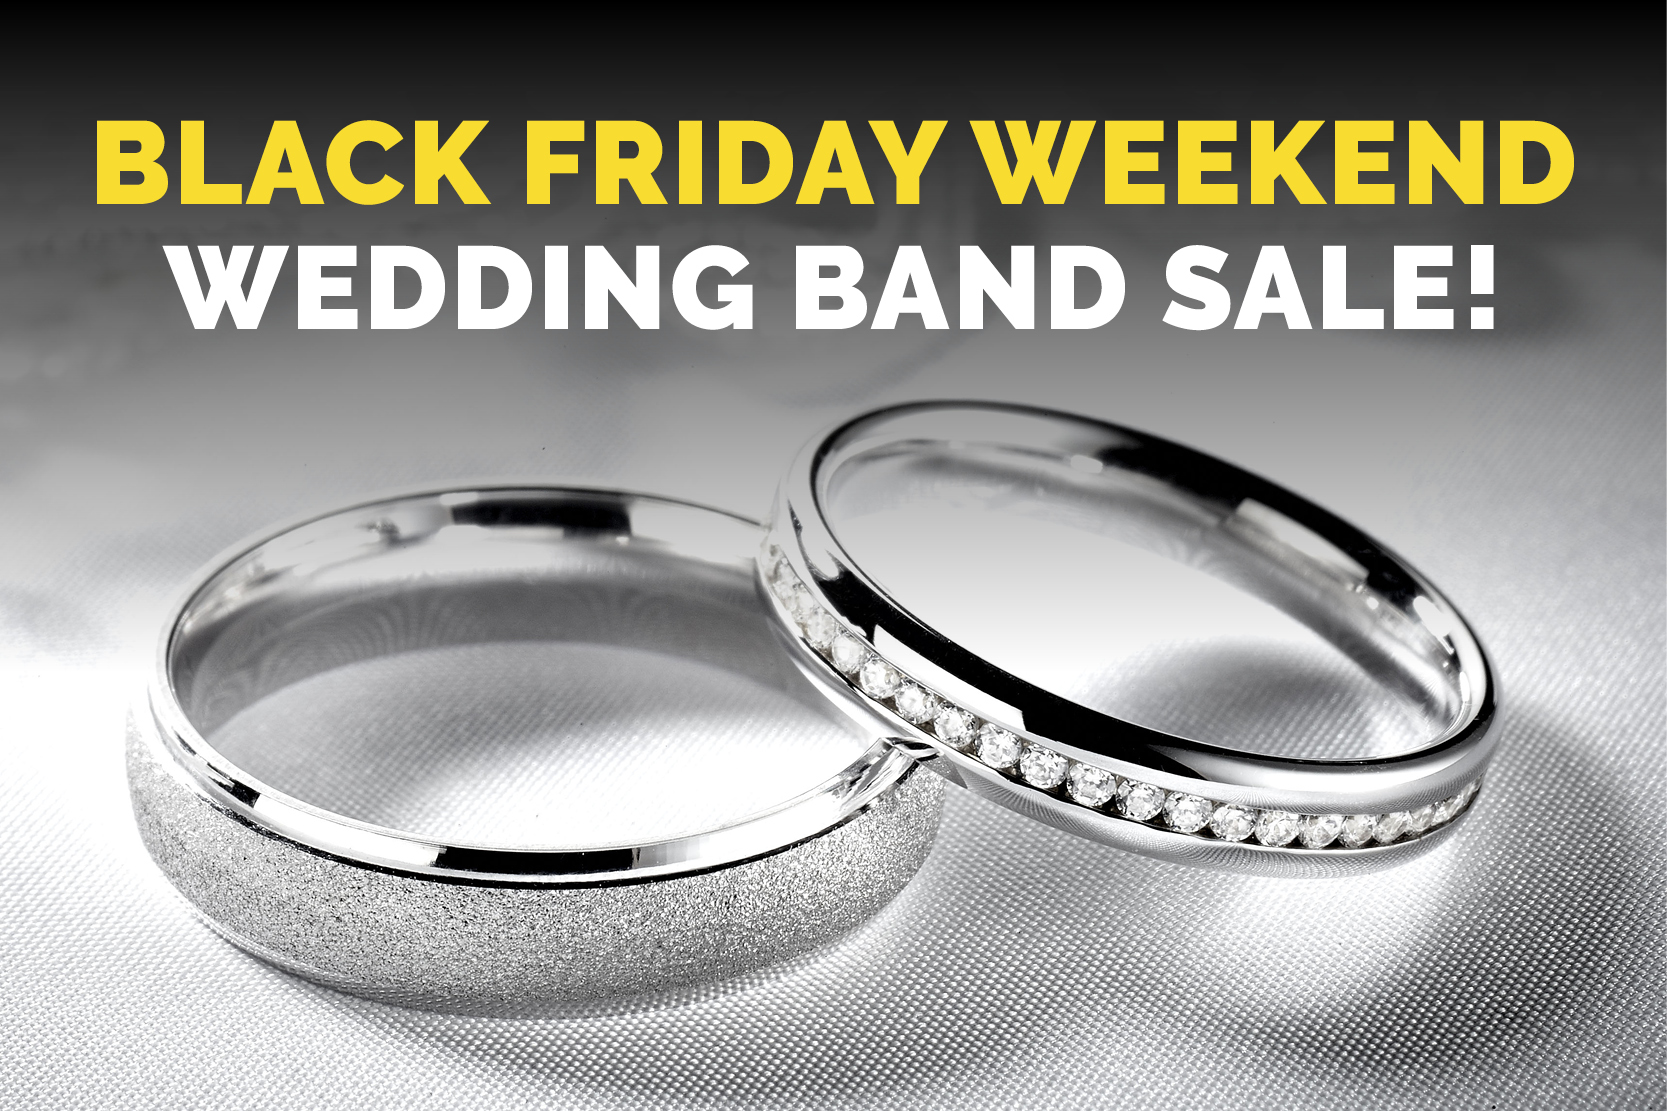 Black Friday Weekend Wedding Band Sale!